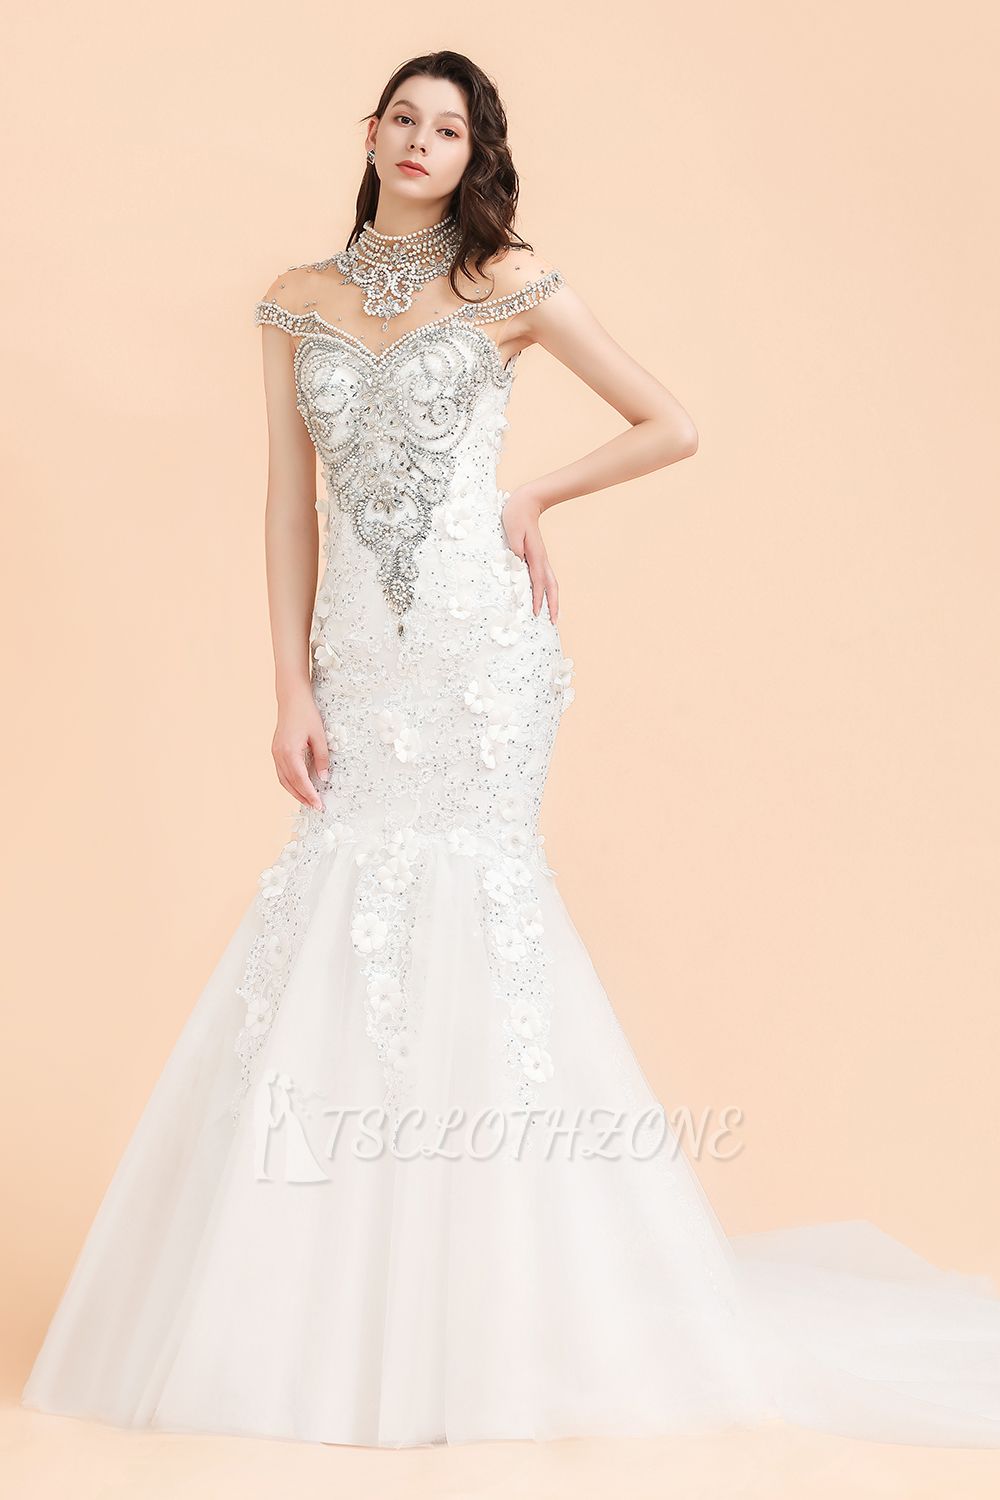 Sparkle High neck Mermaid Silver Beaded White Wedding Dress